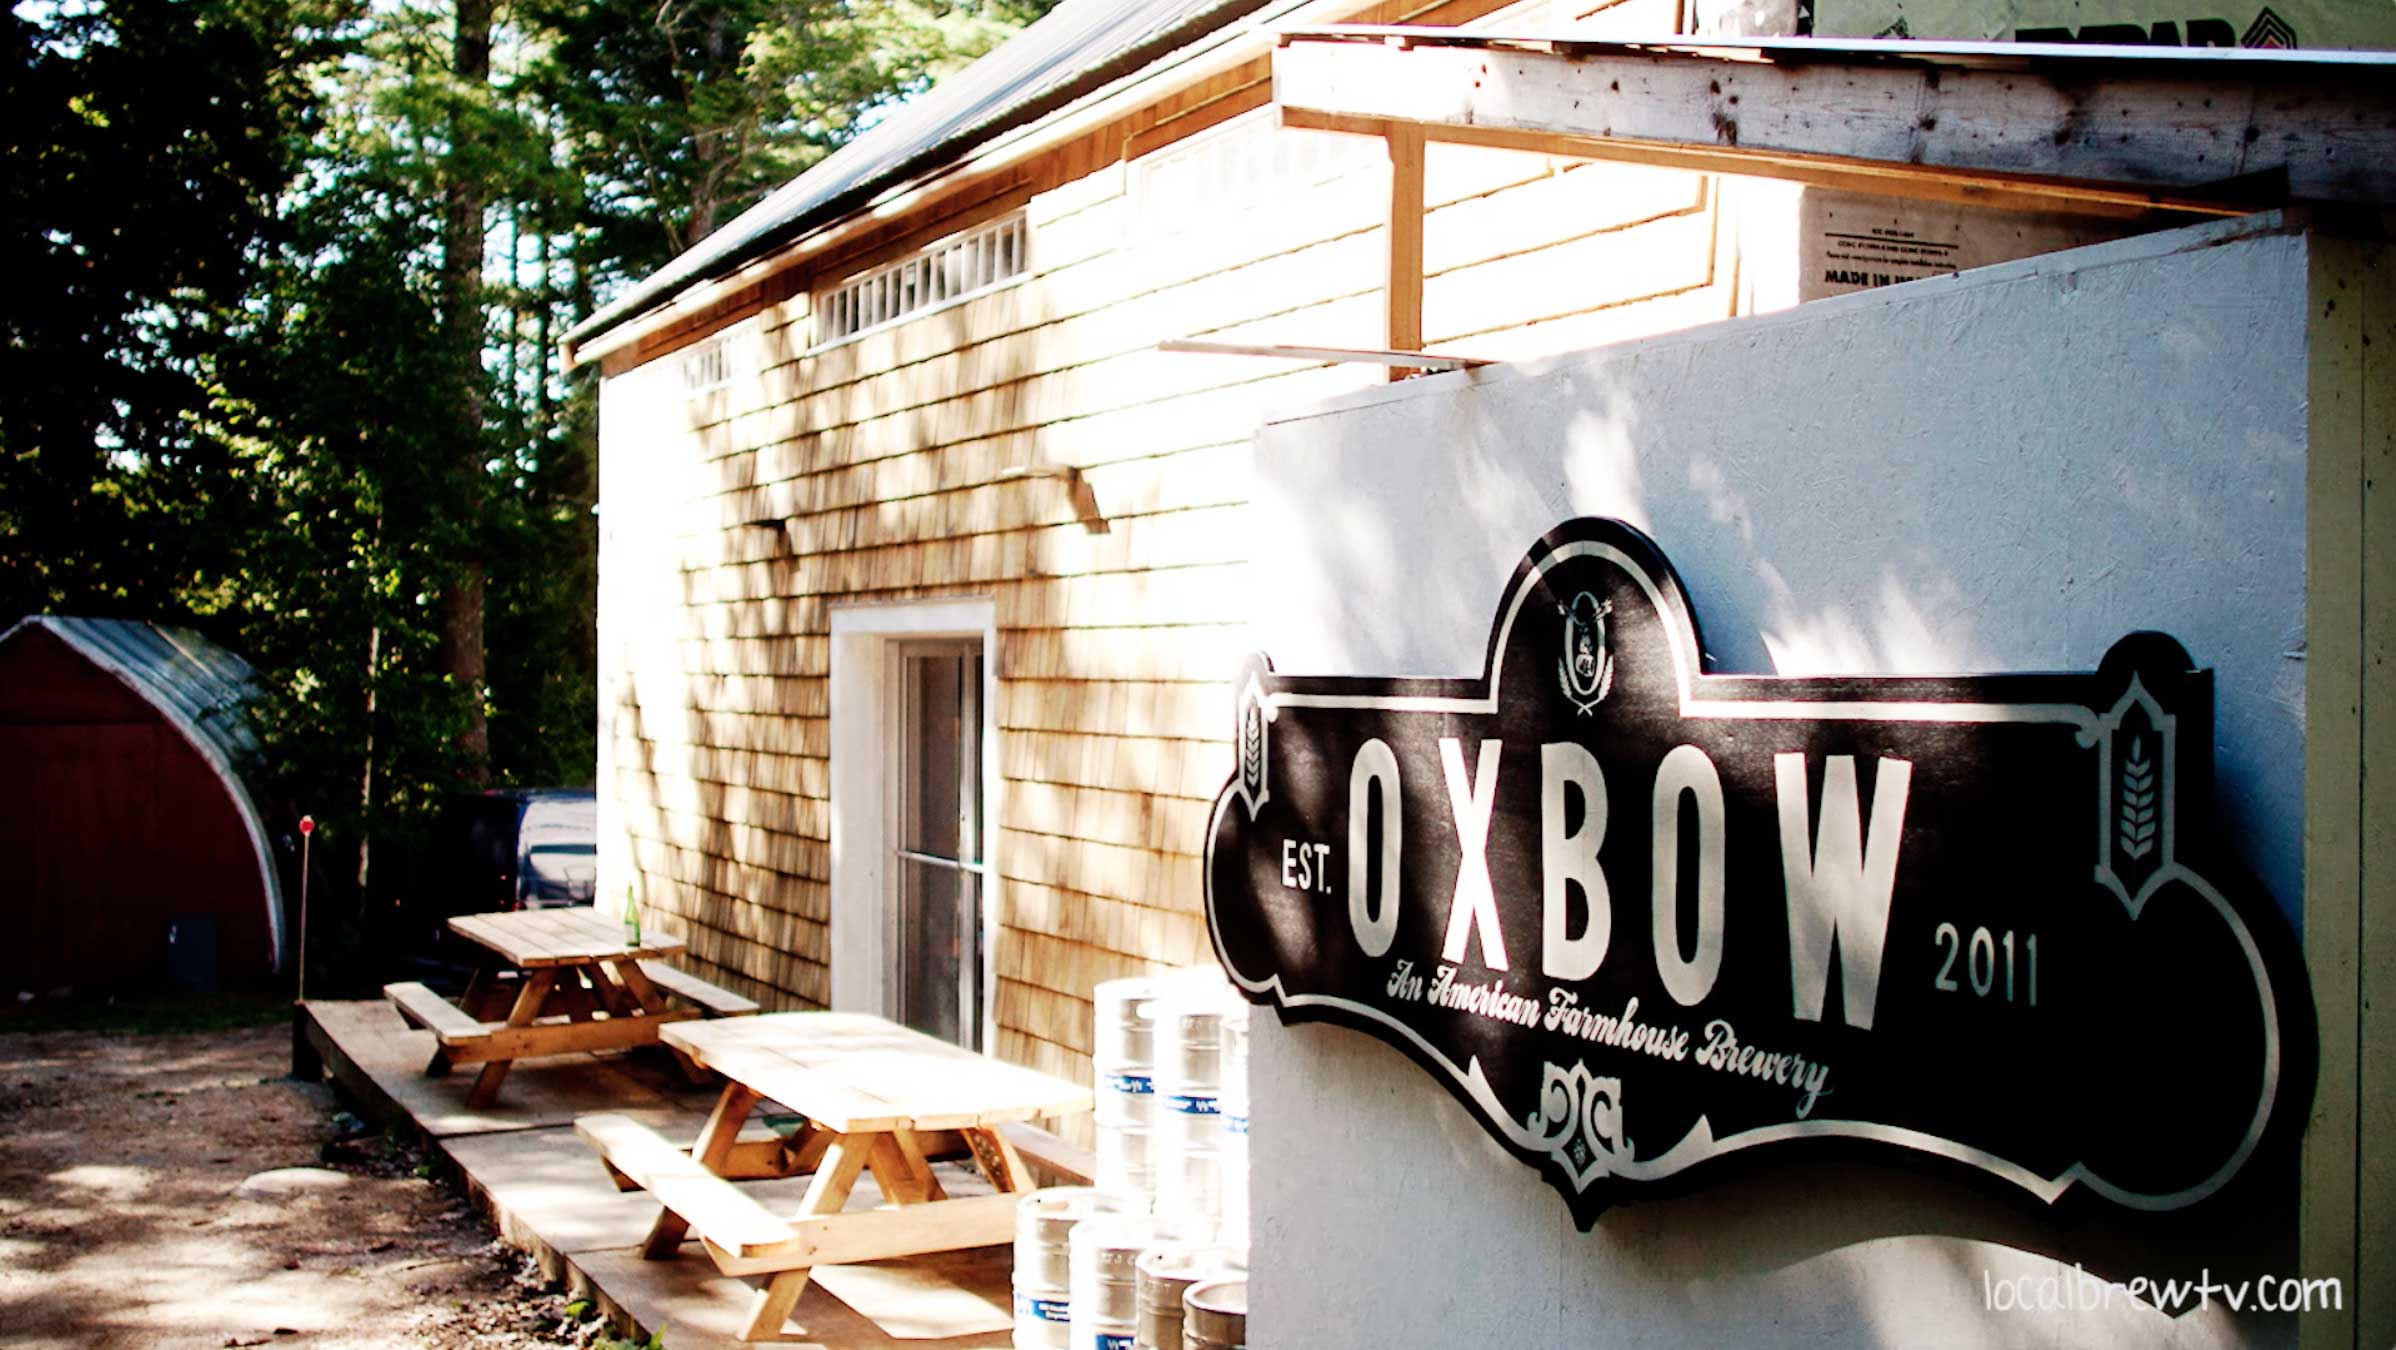 Oxbow Brewing Company – Local Brew TV